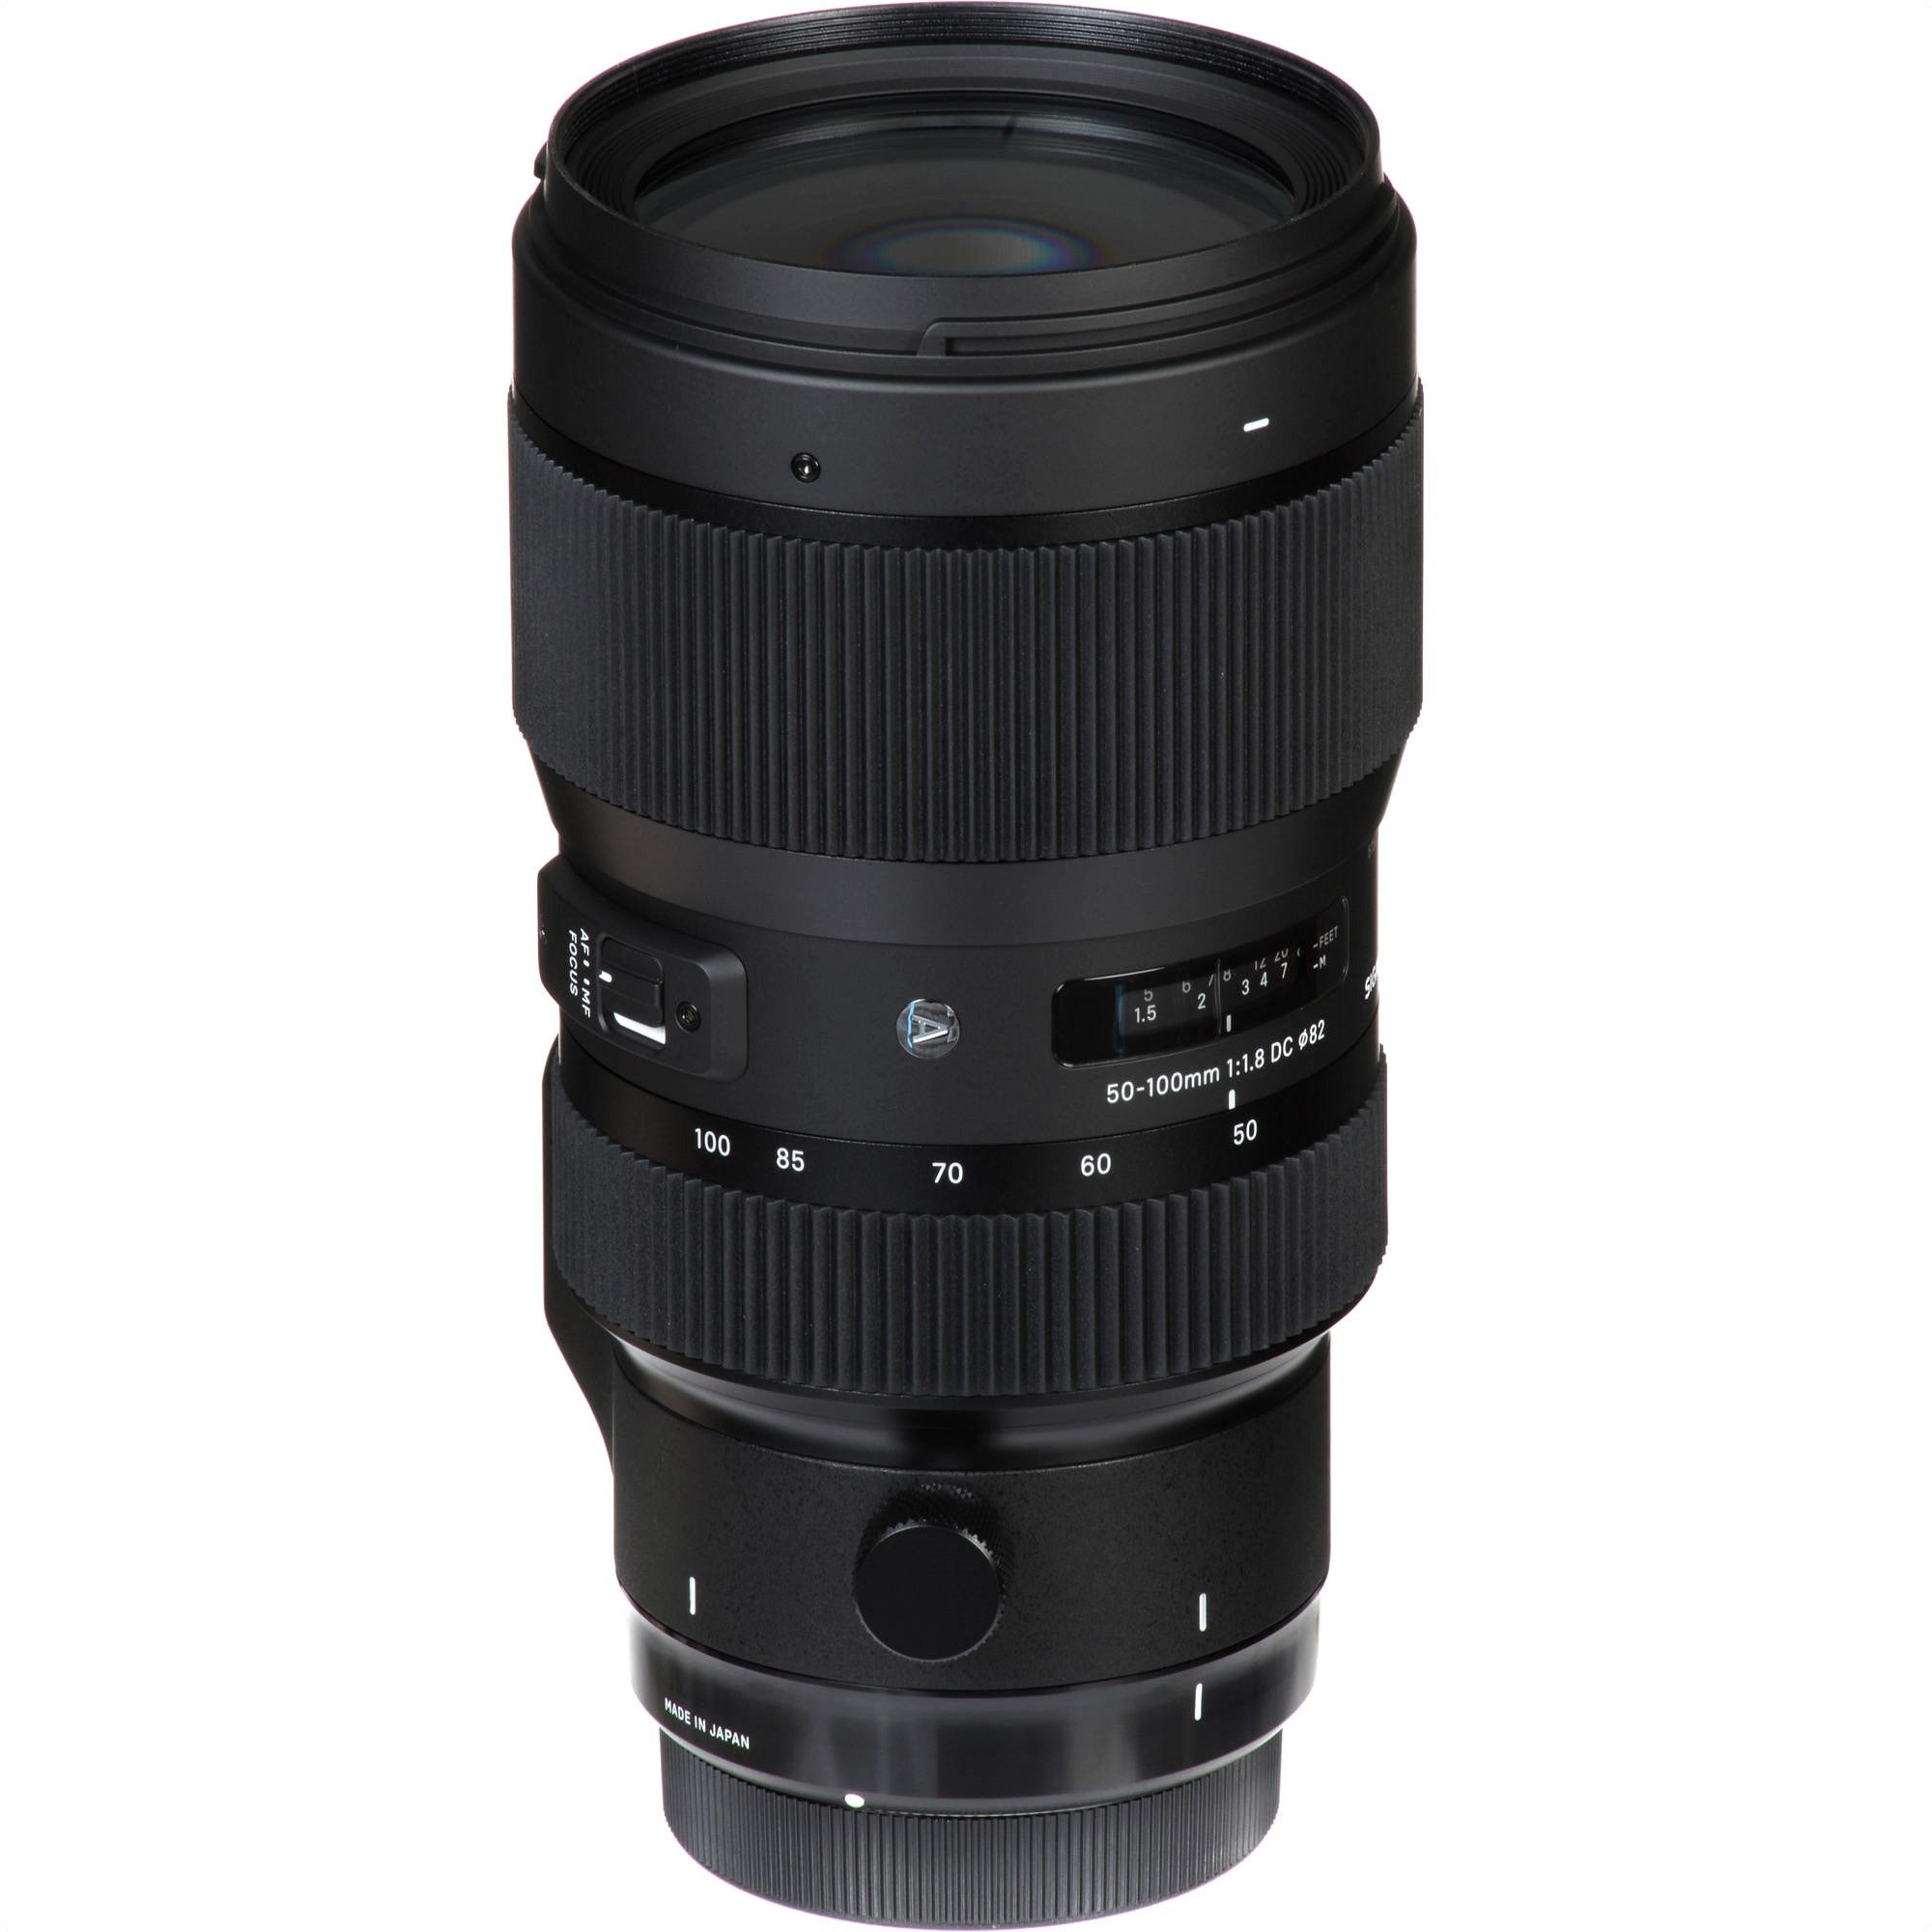 Sigma 50-100mm F1.8 DC HSM Art Lens for Sigma SA